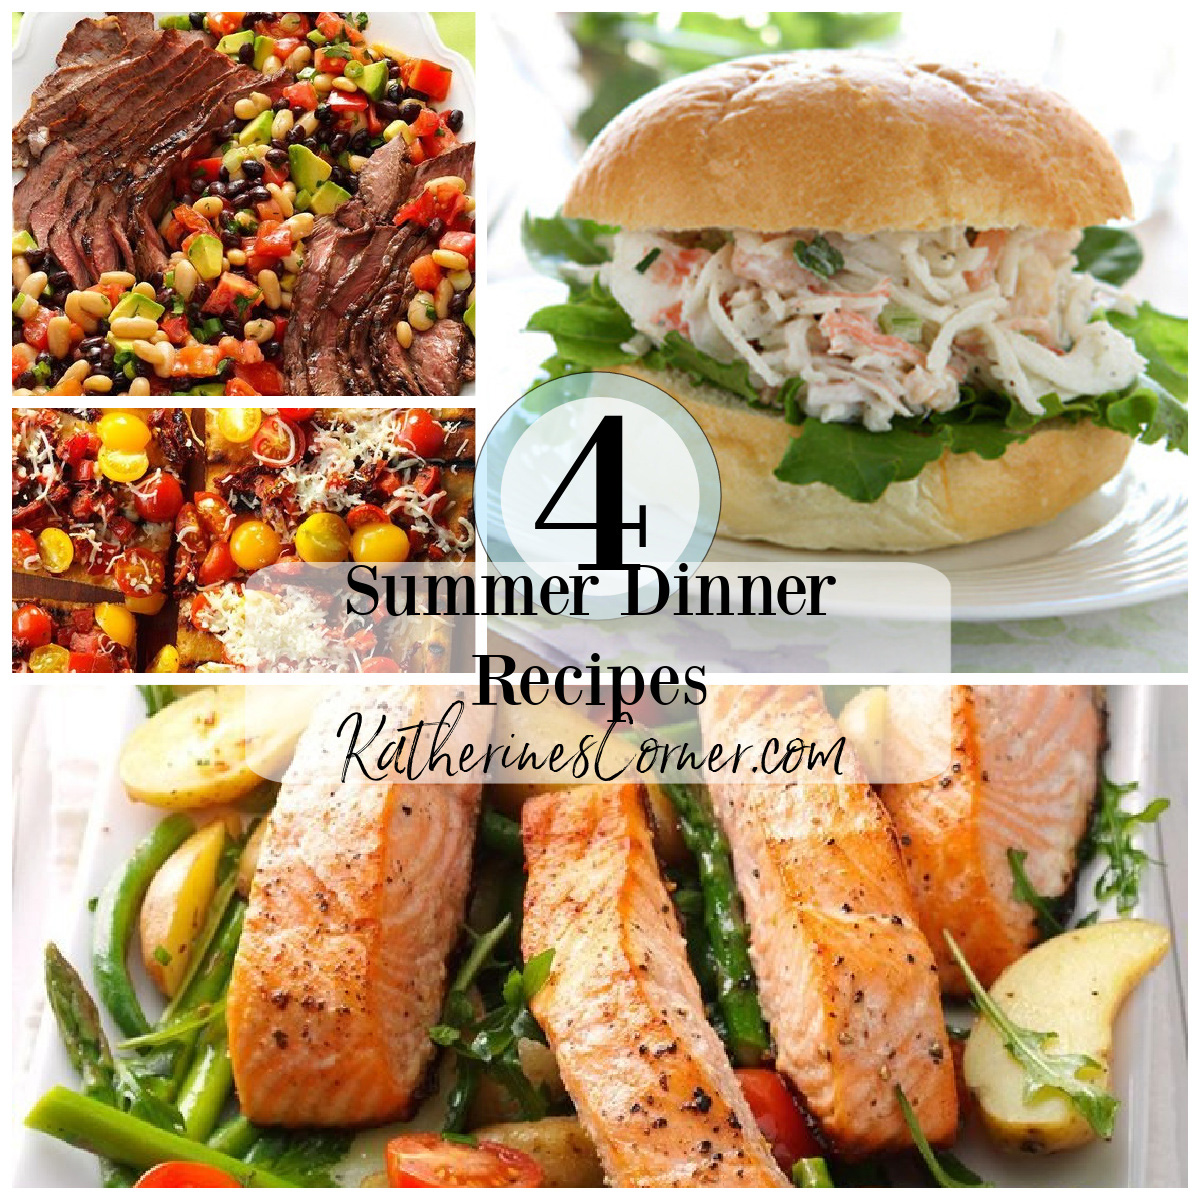 Recipes for a Hot Summer Dinner